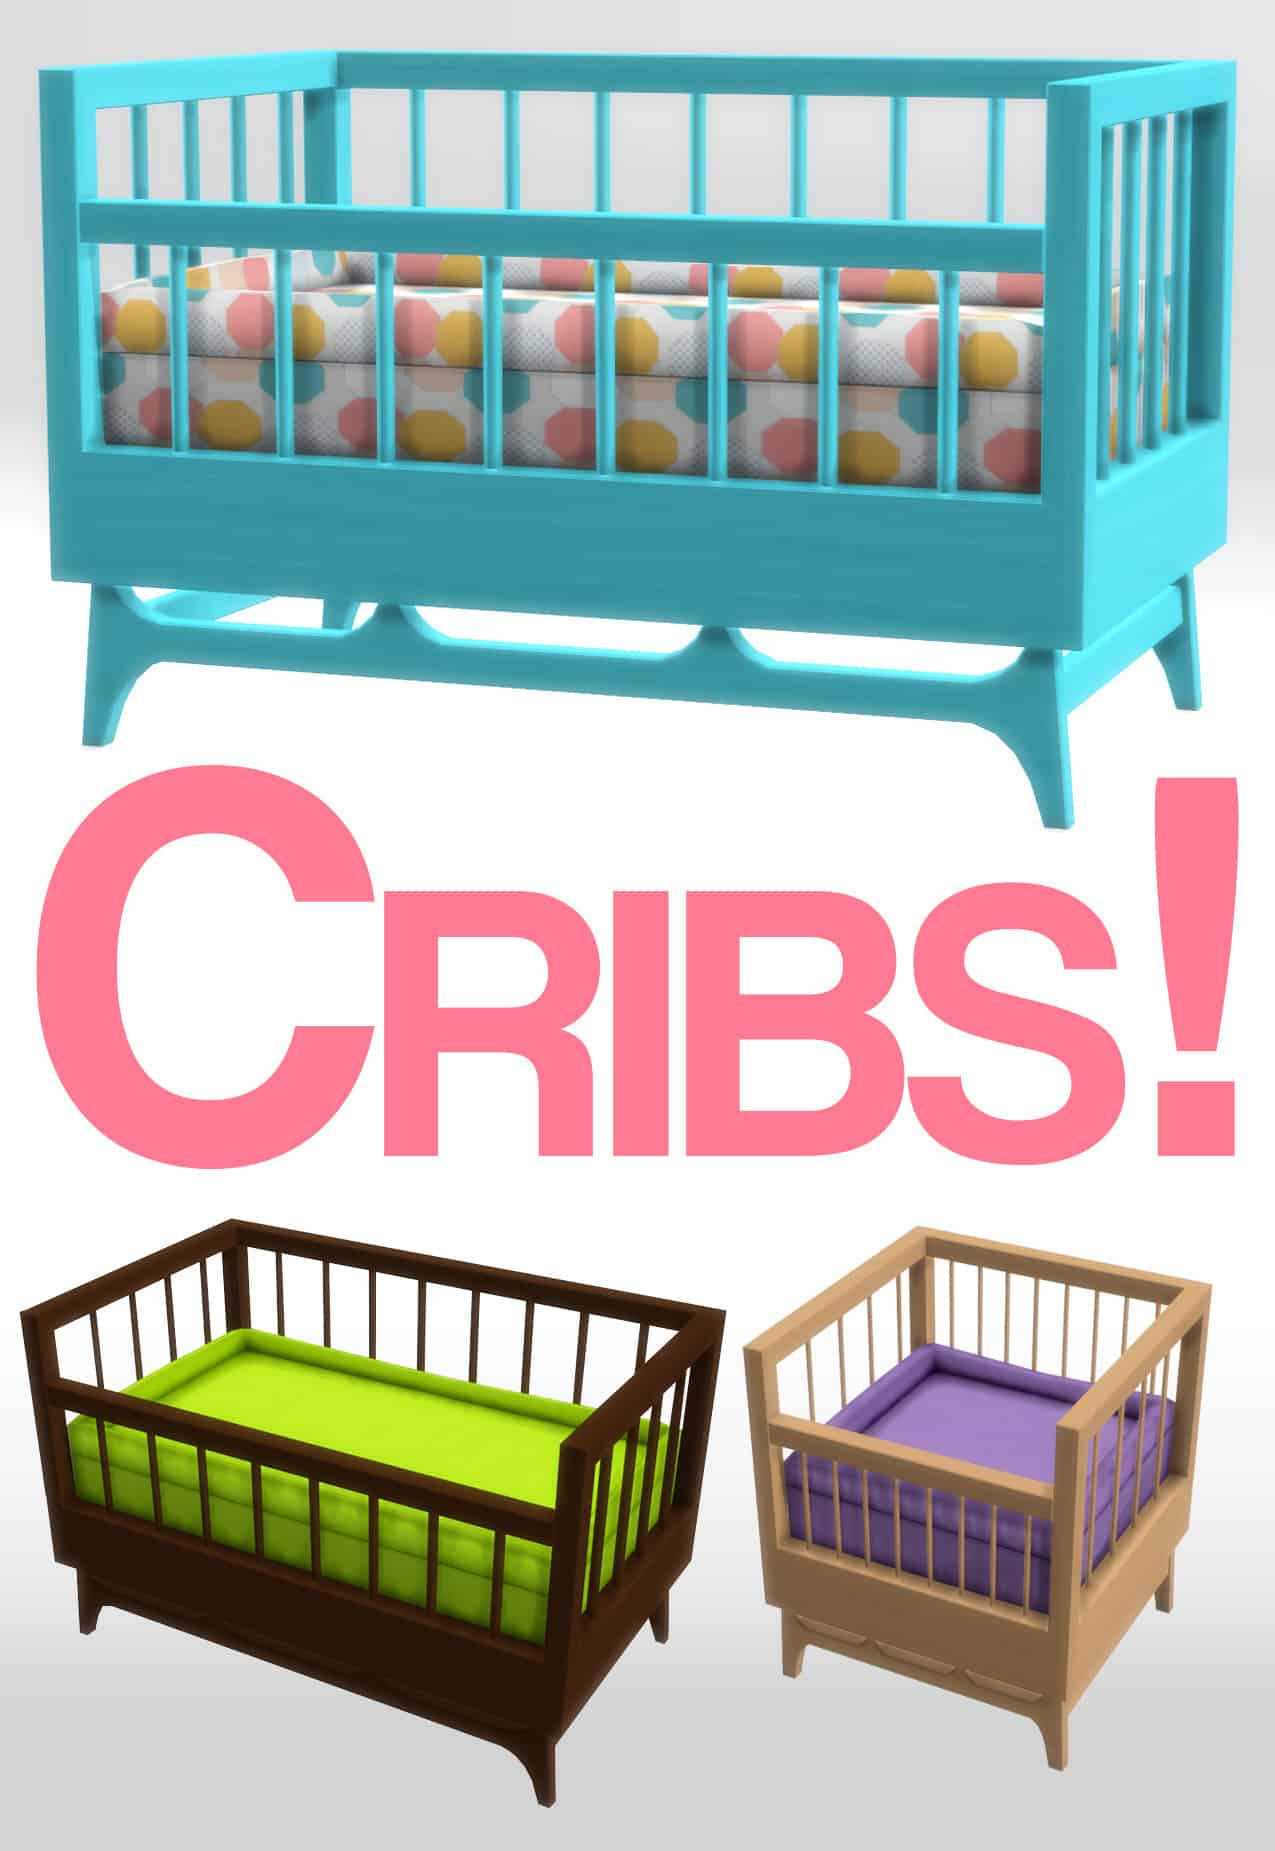 Cribs!